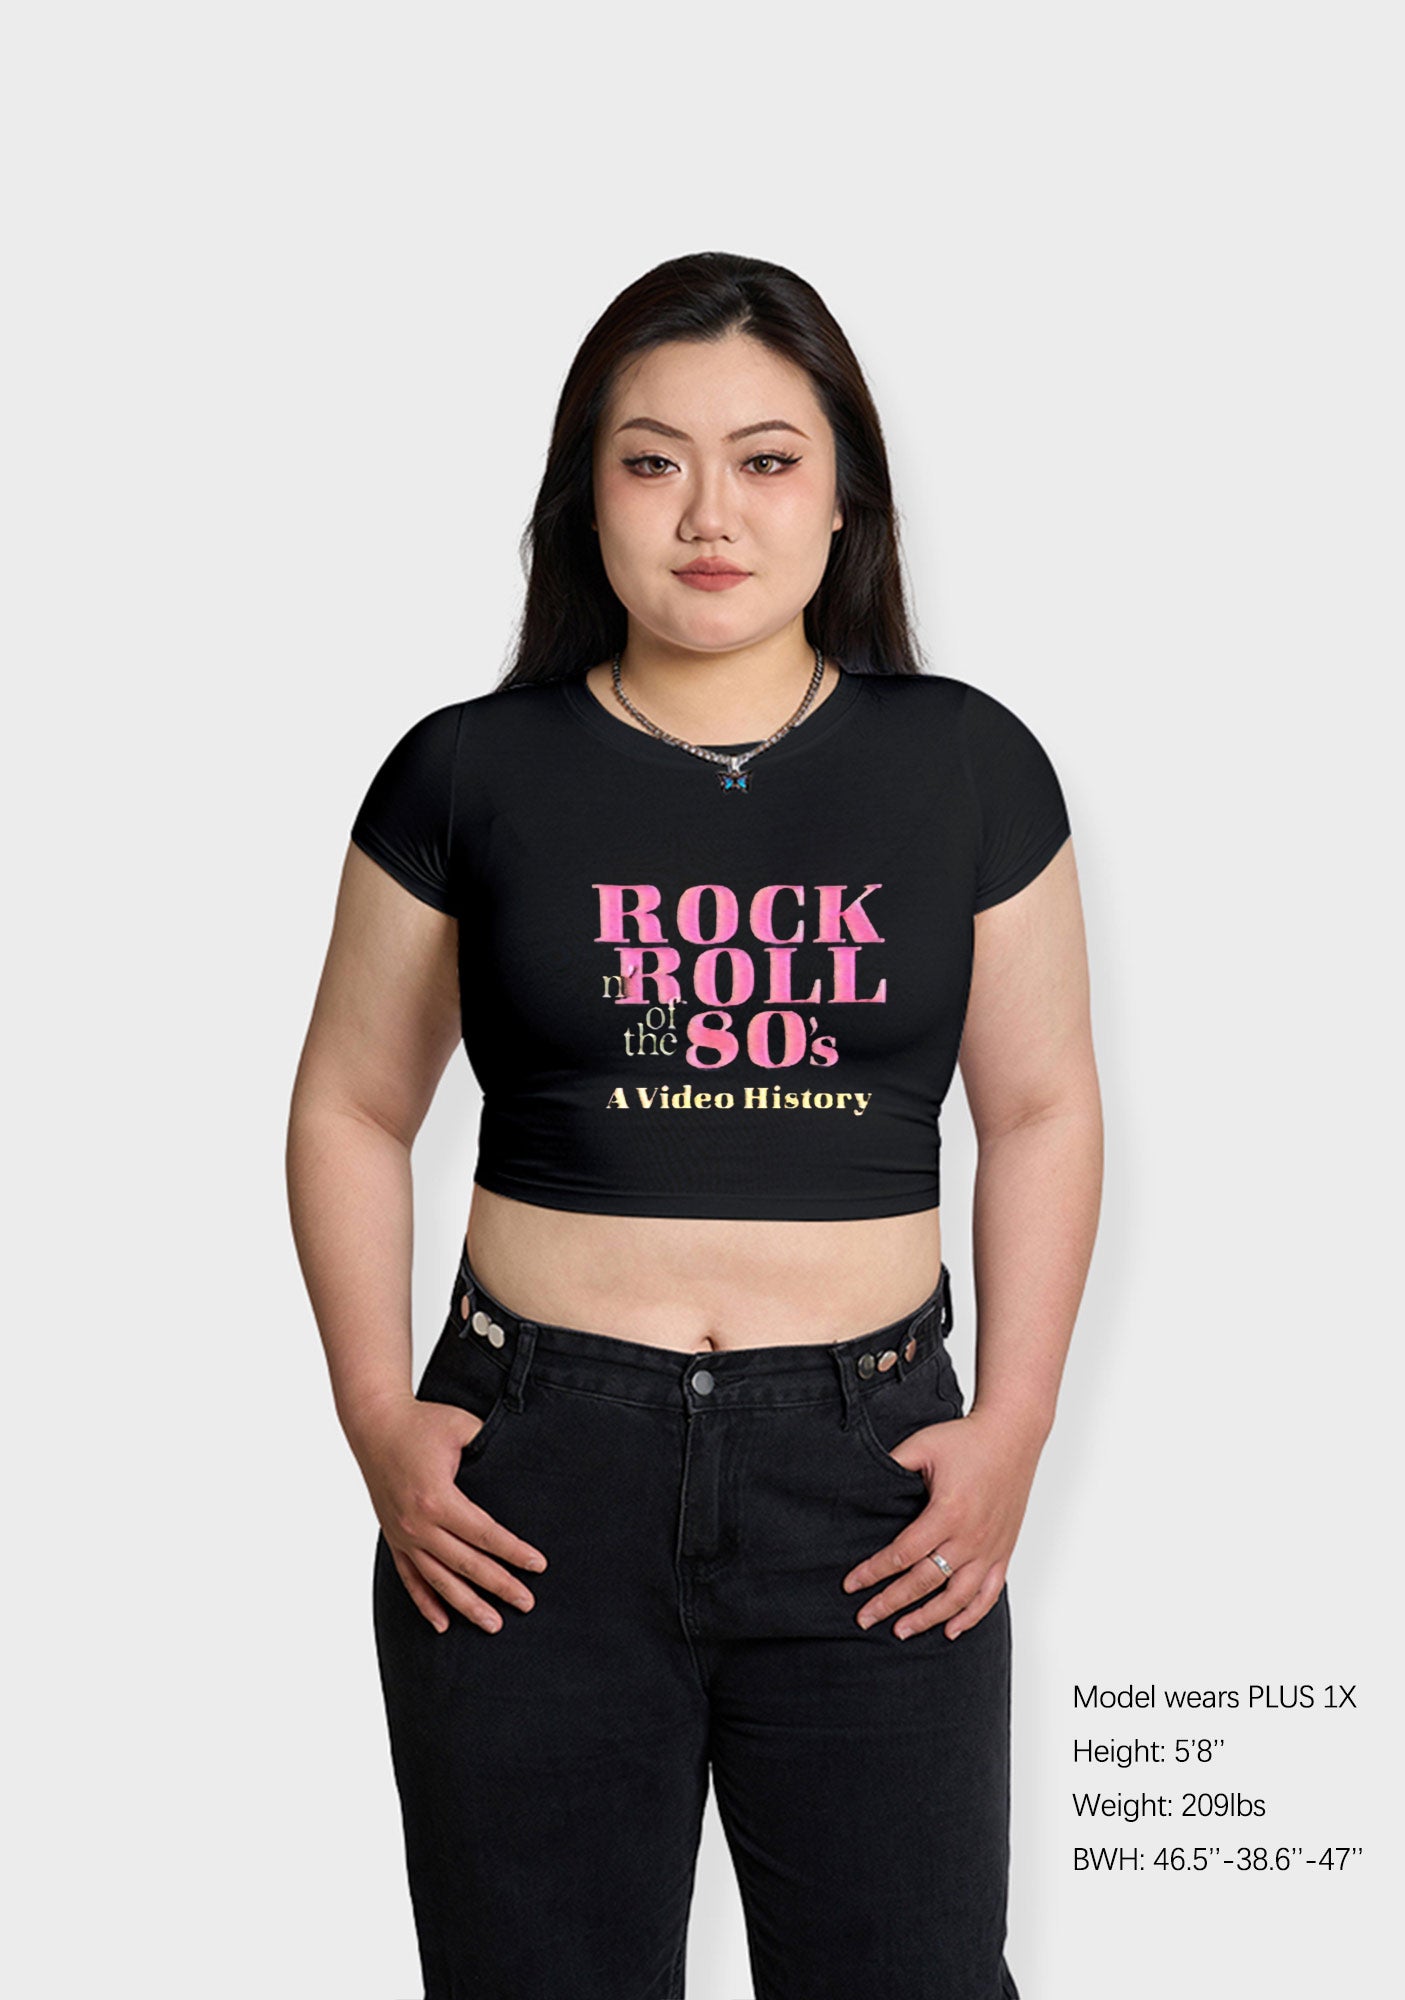 Curvy Rock Roll 80's Baby Tee